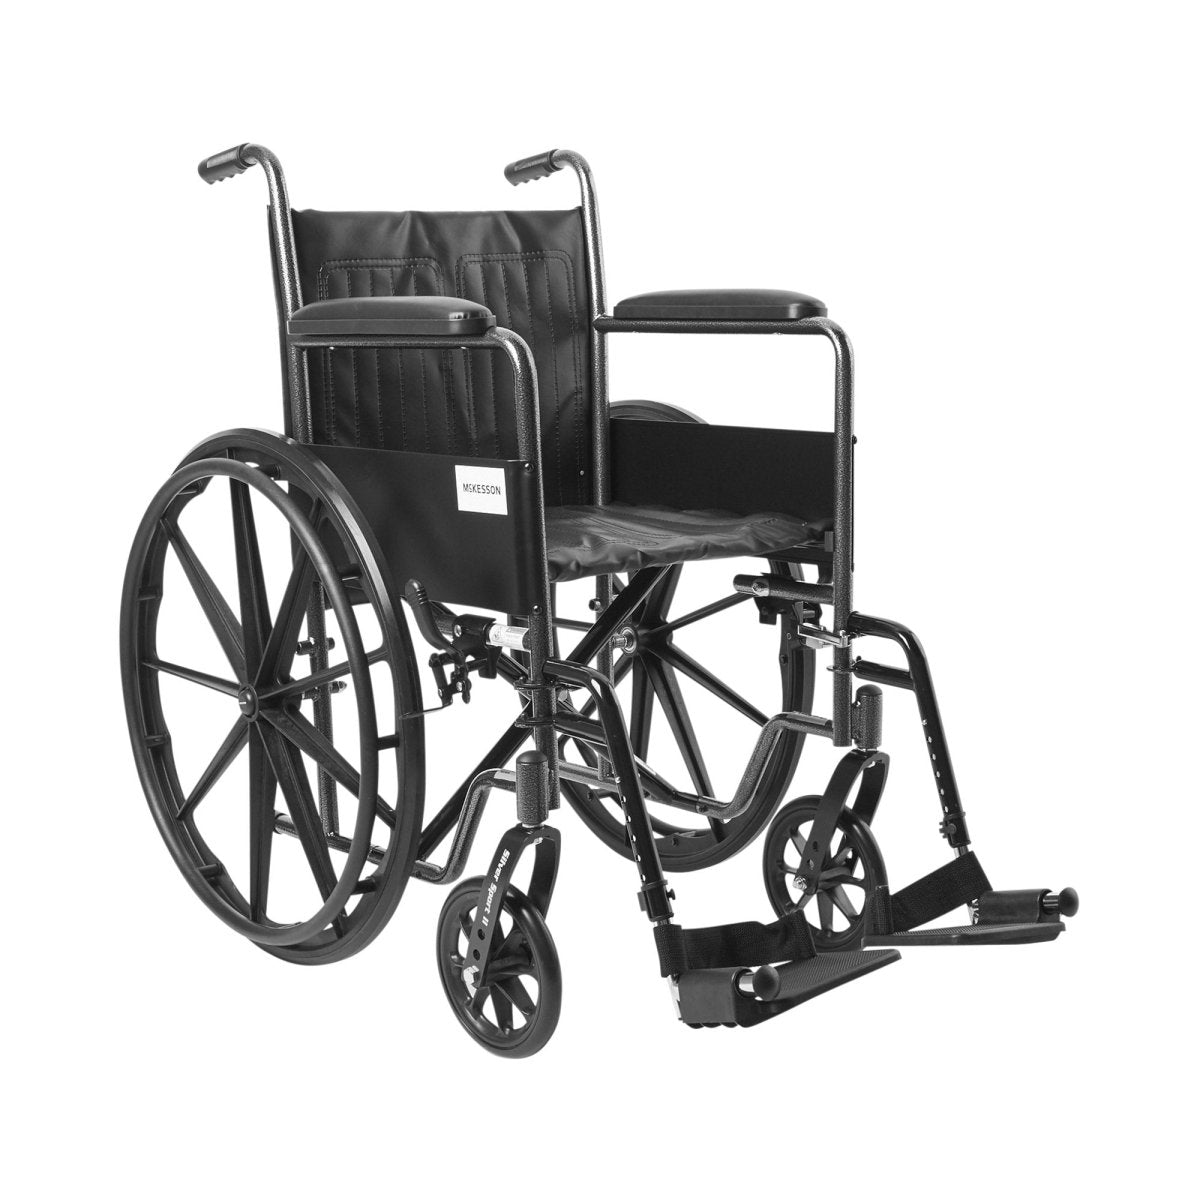 McKesson Dual Axle Wheelchair Full Length Arm Swing-Away Footrest - 1065274_EA - 2